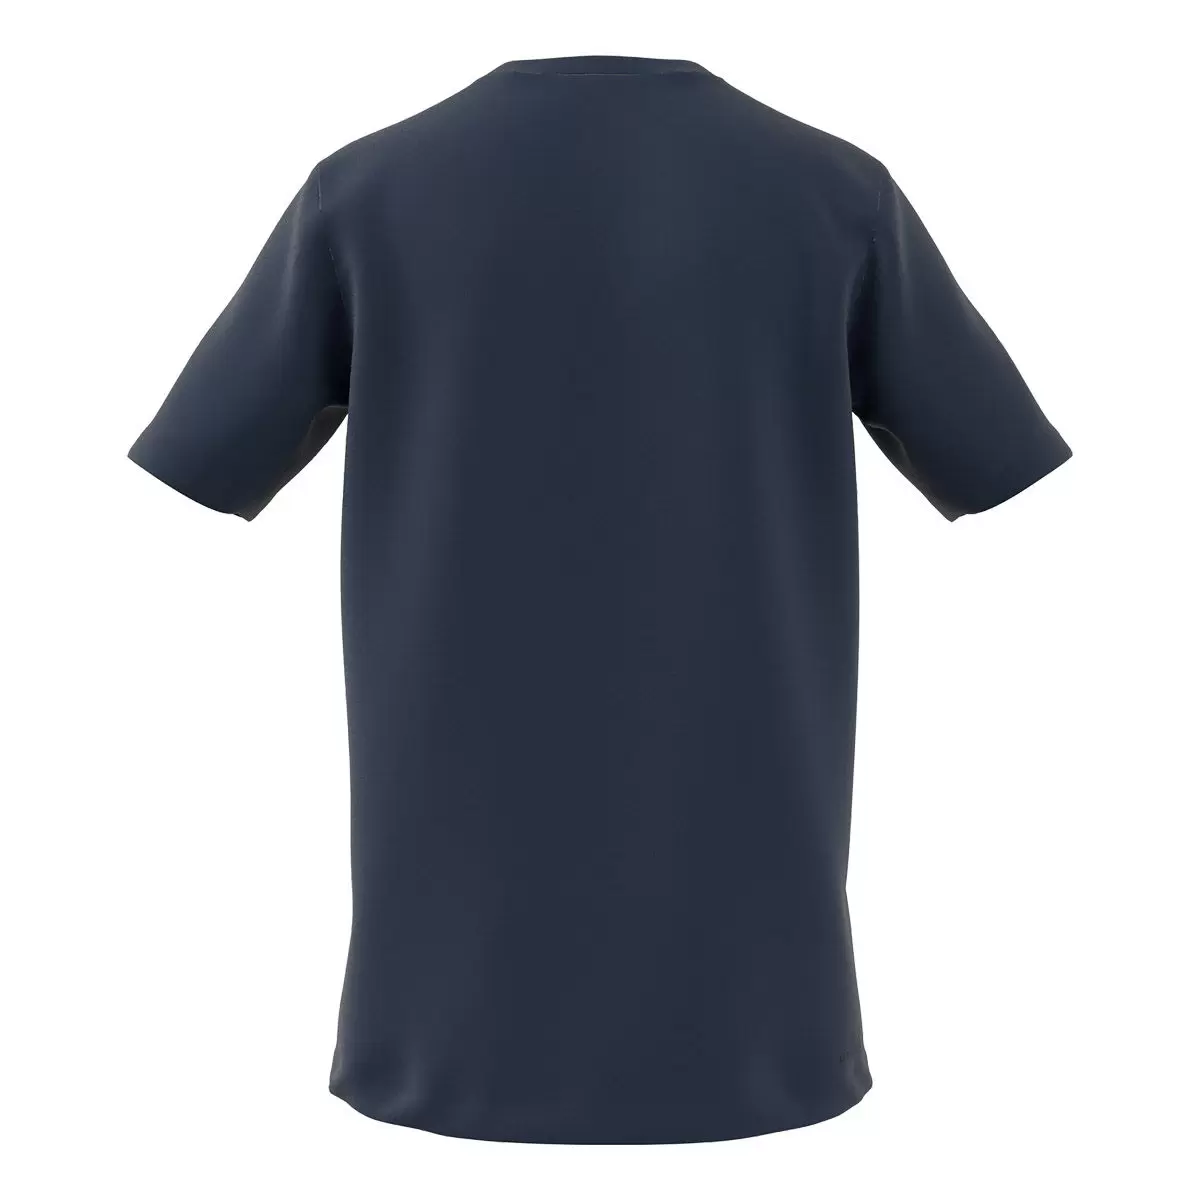 Adidas 男短袖Logo上衣 深藍 XL